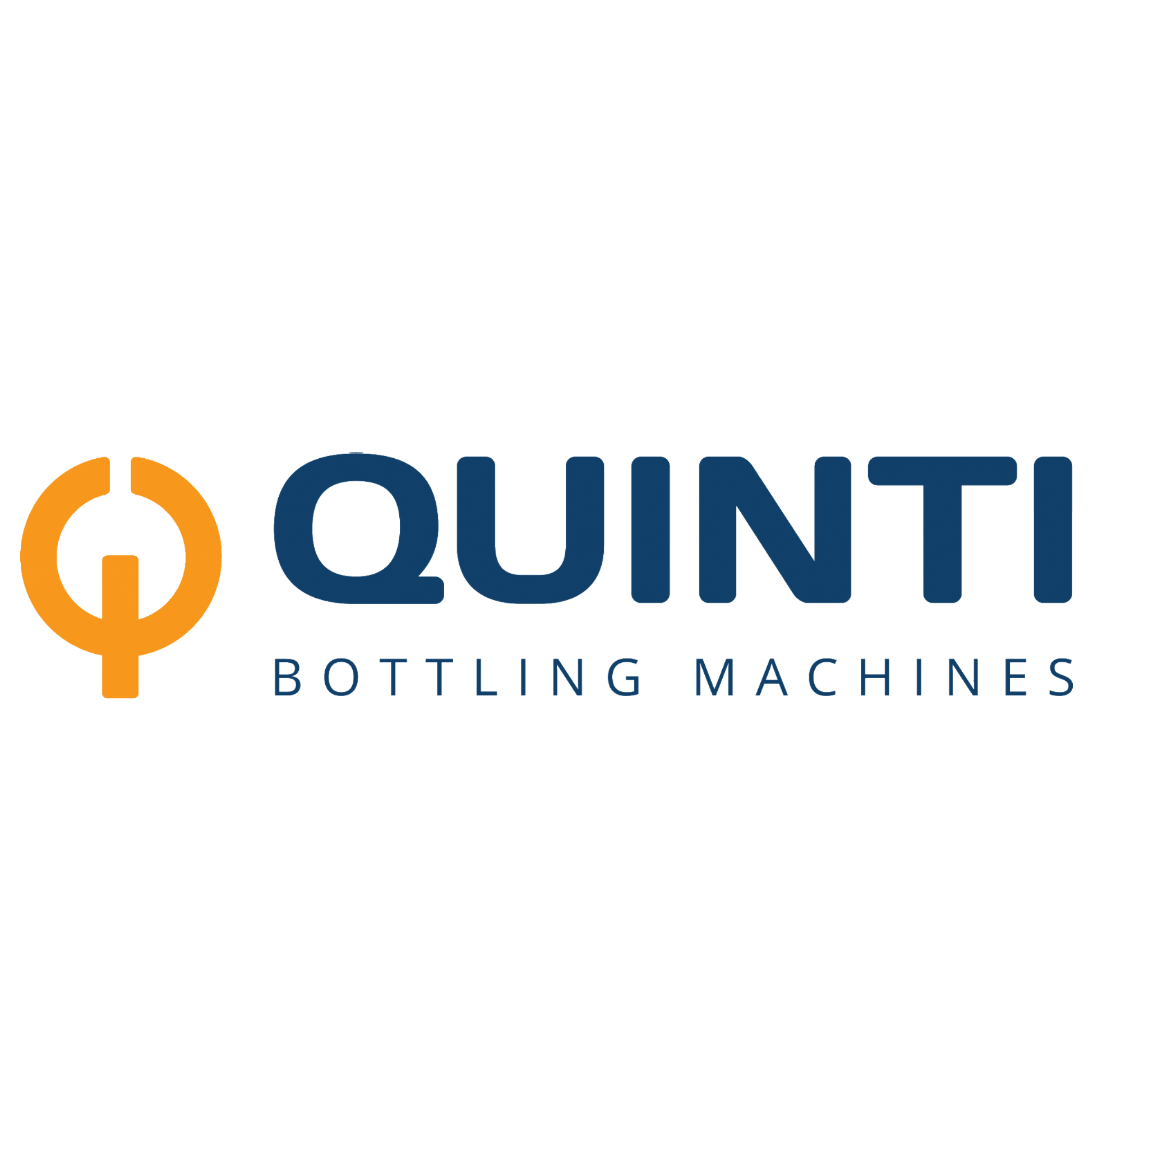 Quinti Bottilig Machines logo